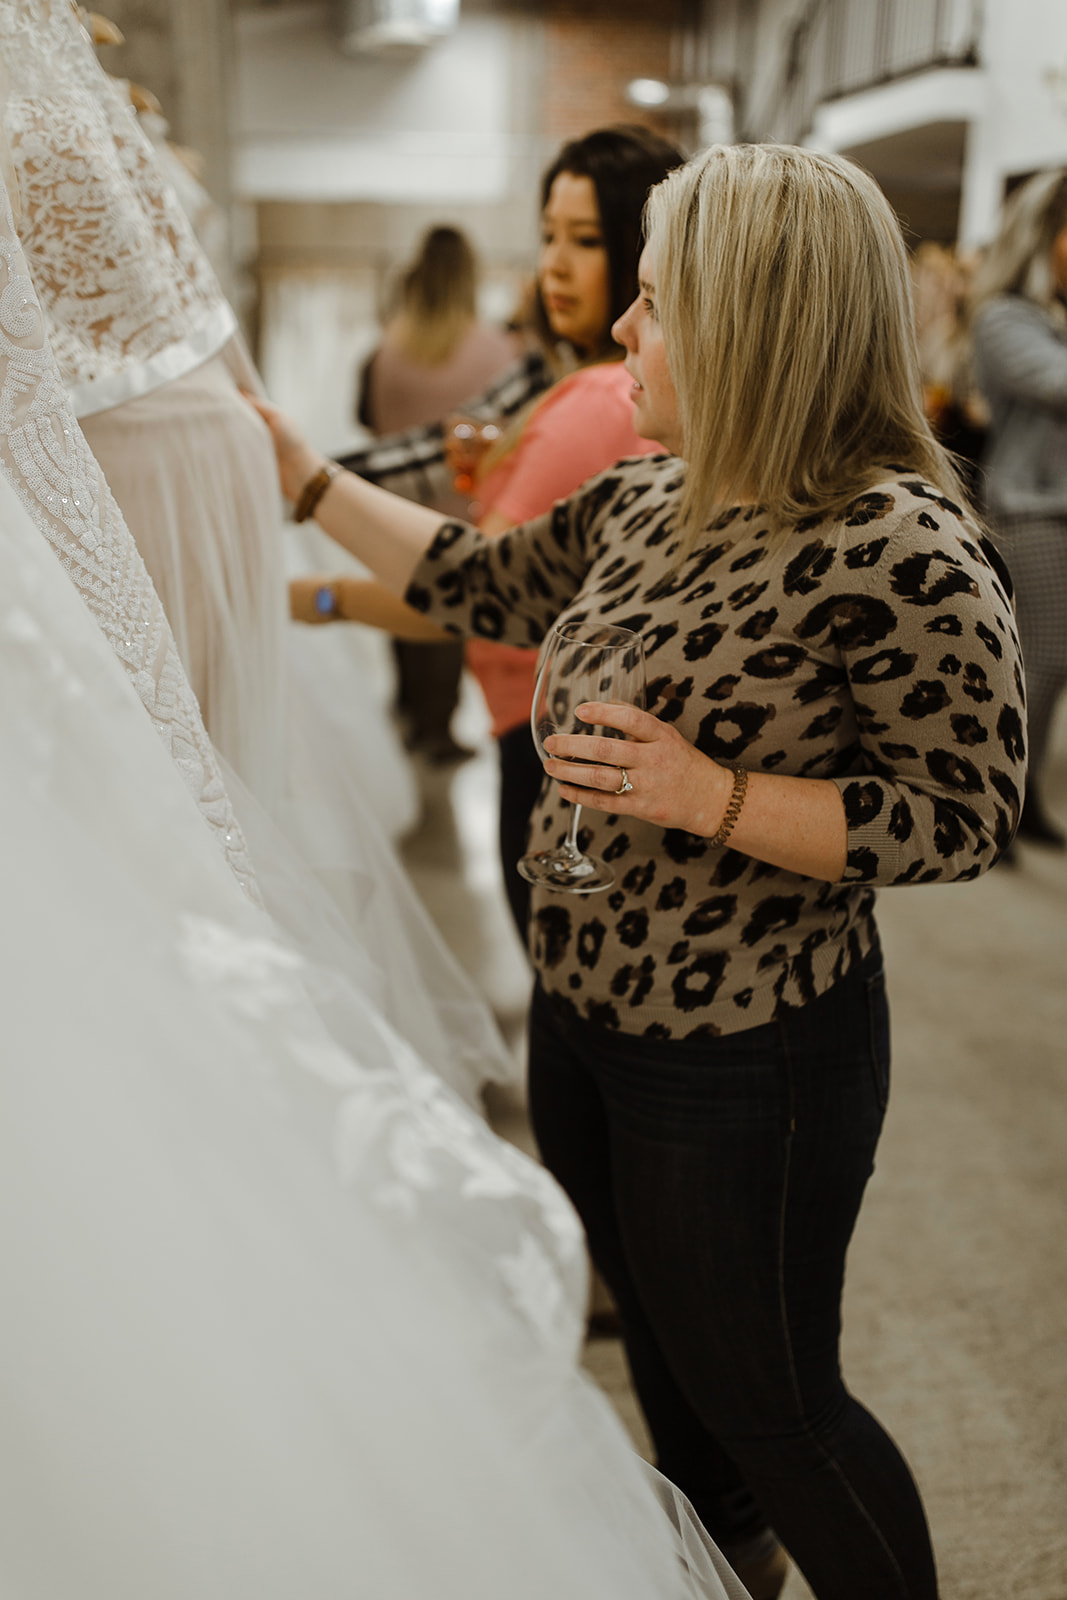 spokane wedding dress fashion show wine bride shopping